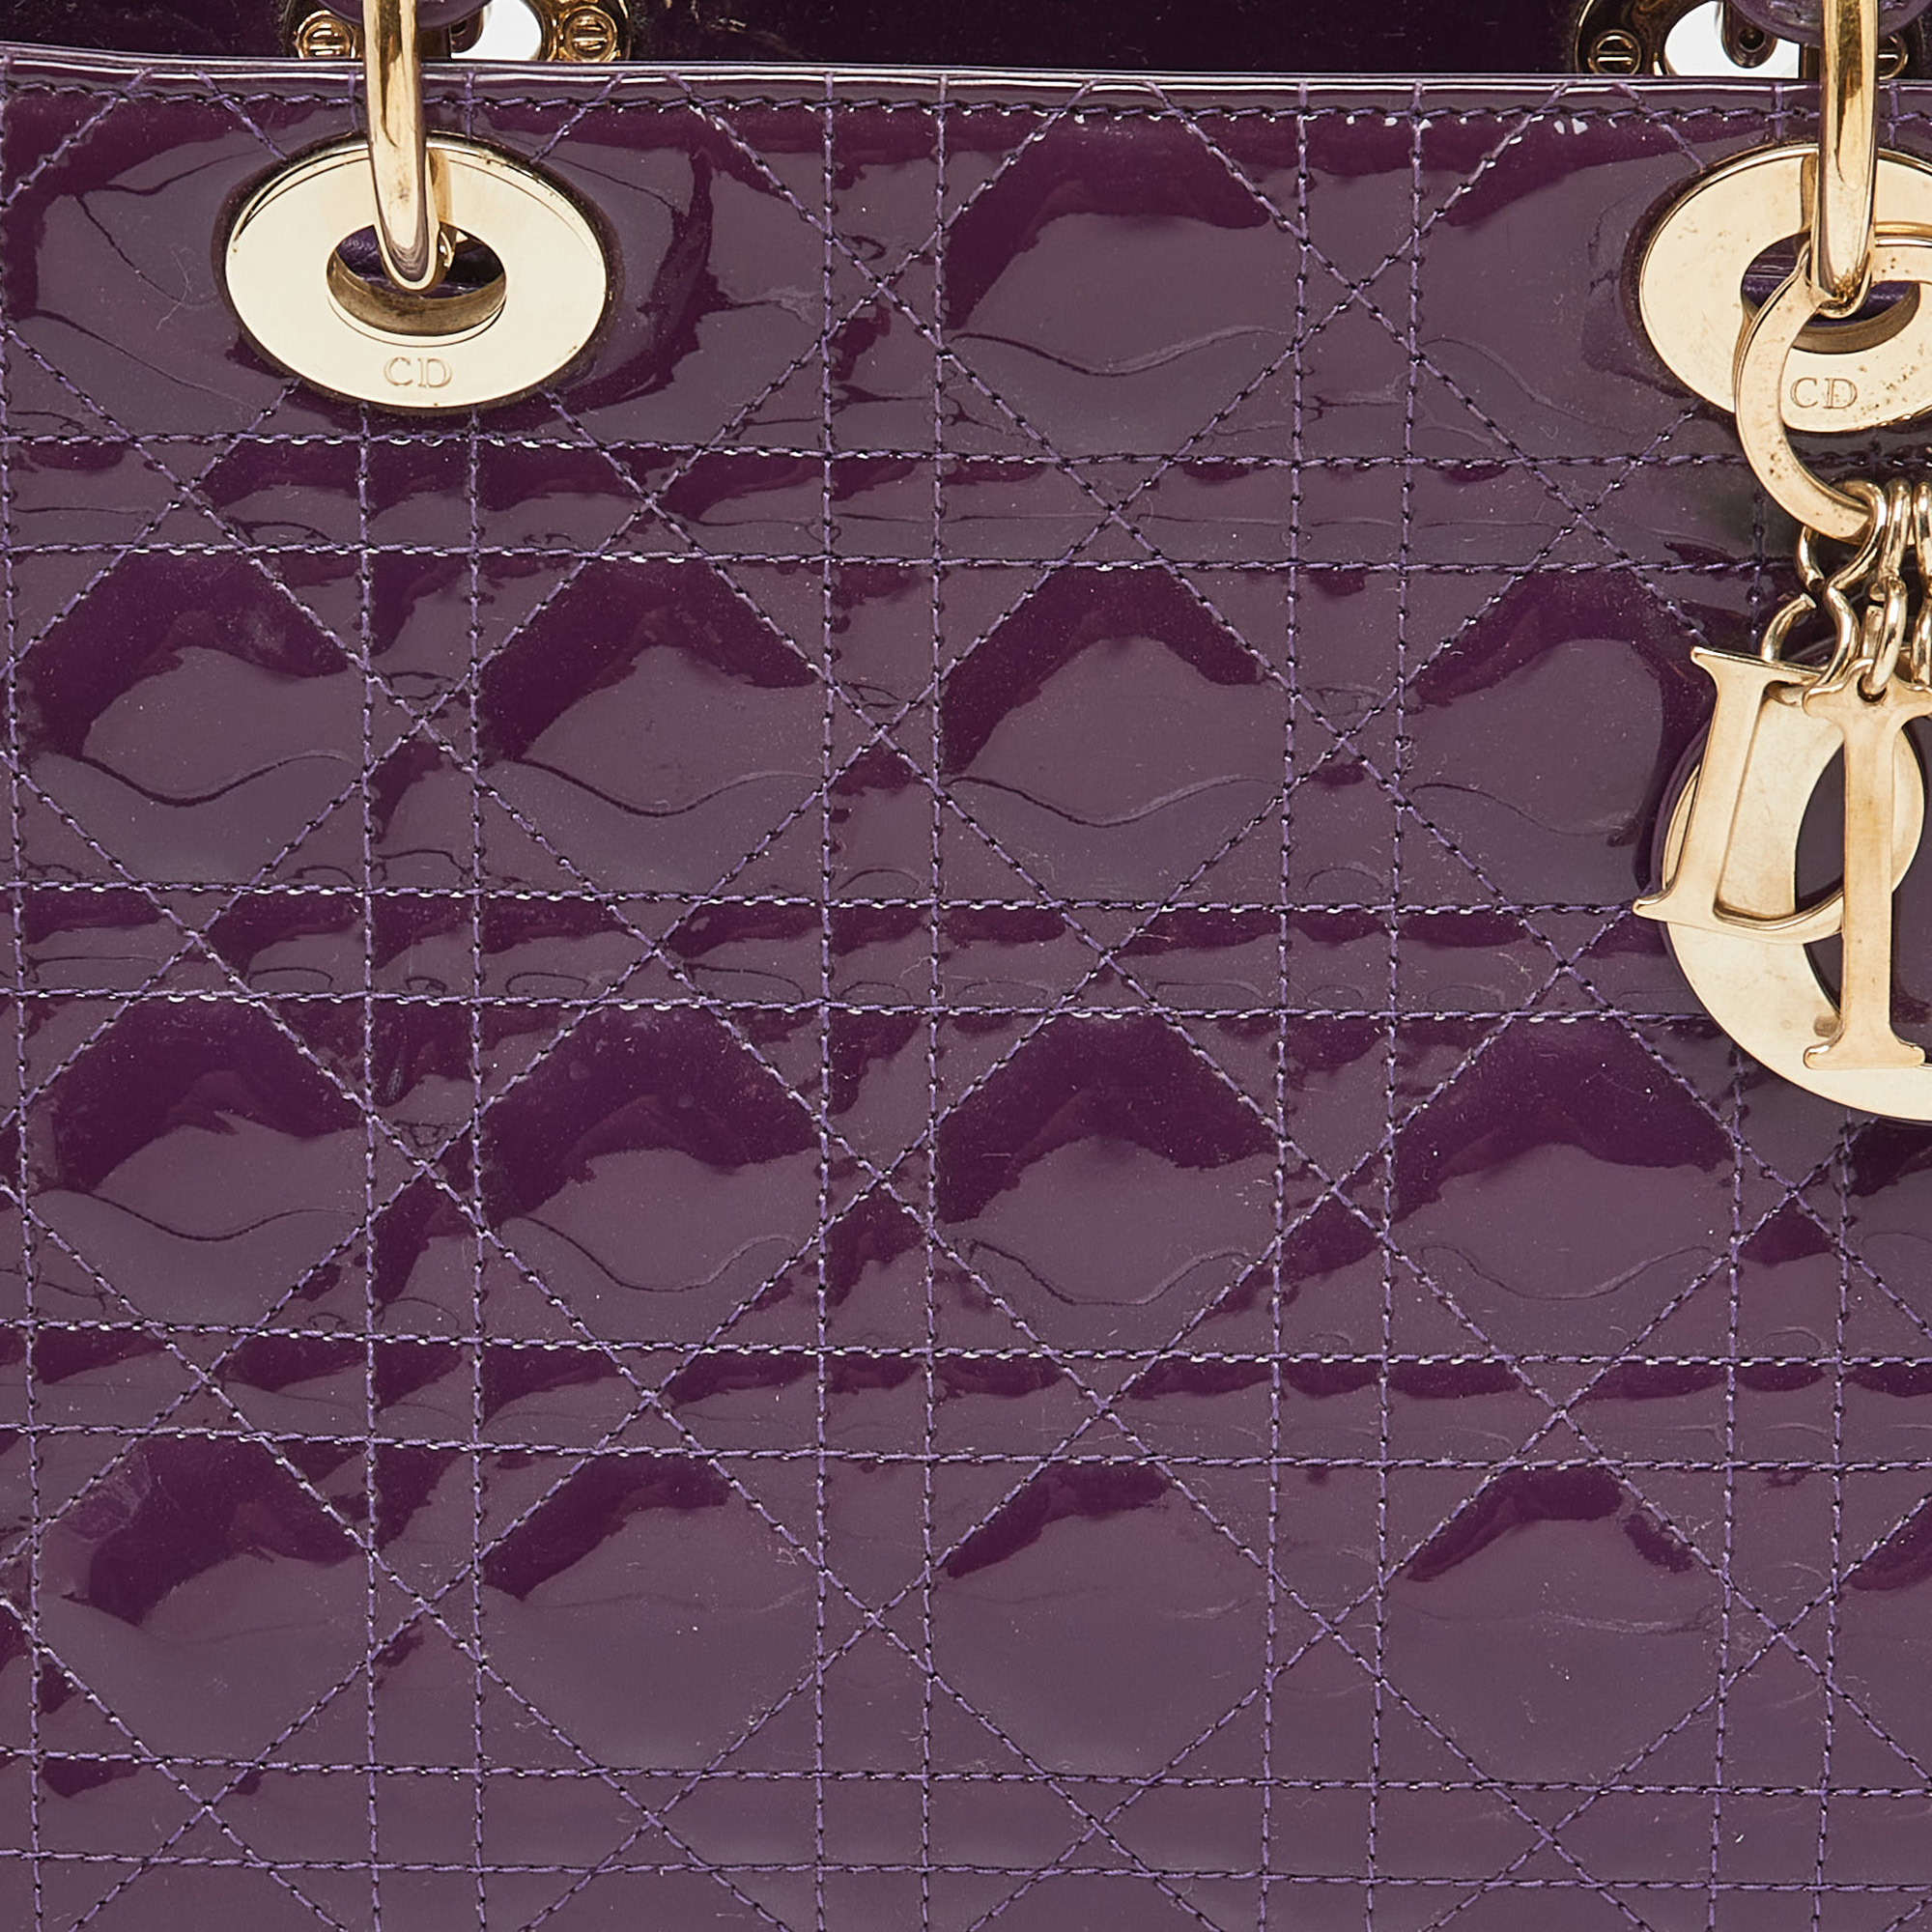 Dior Purple Cannage Patent Leather Medium Lady Dior Tote